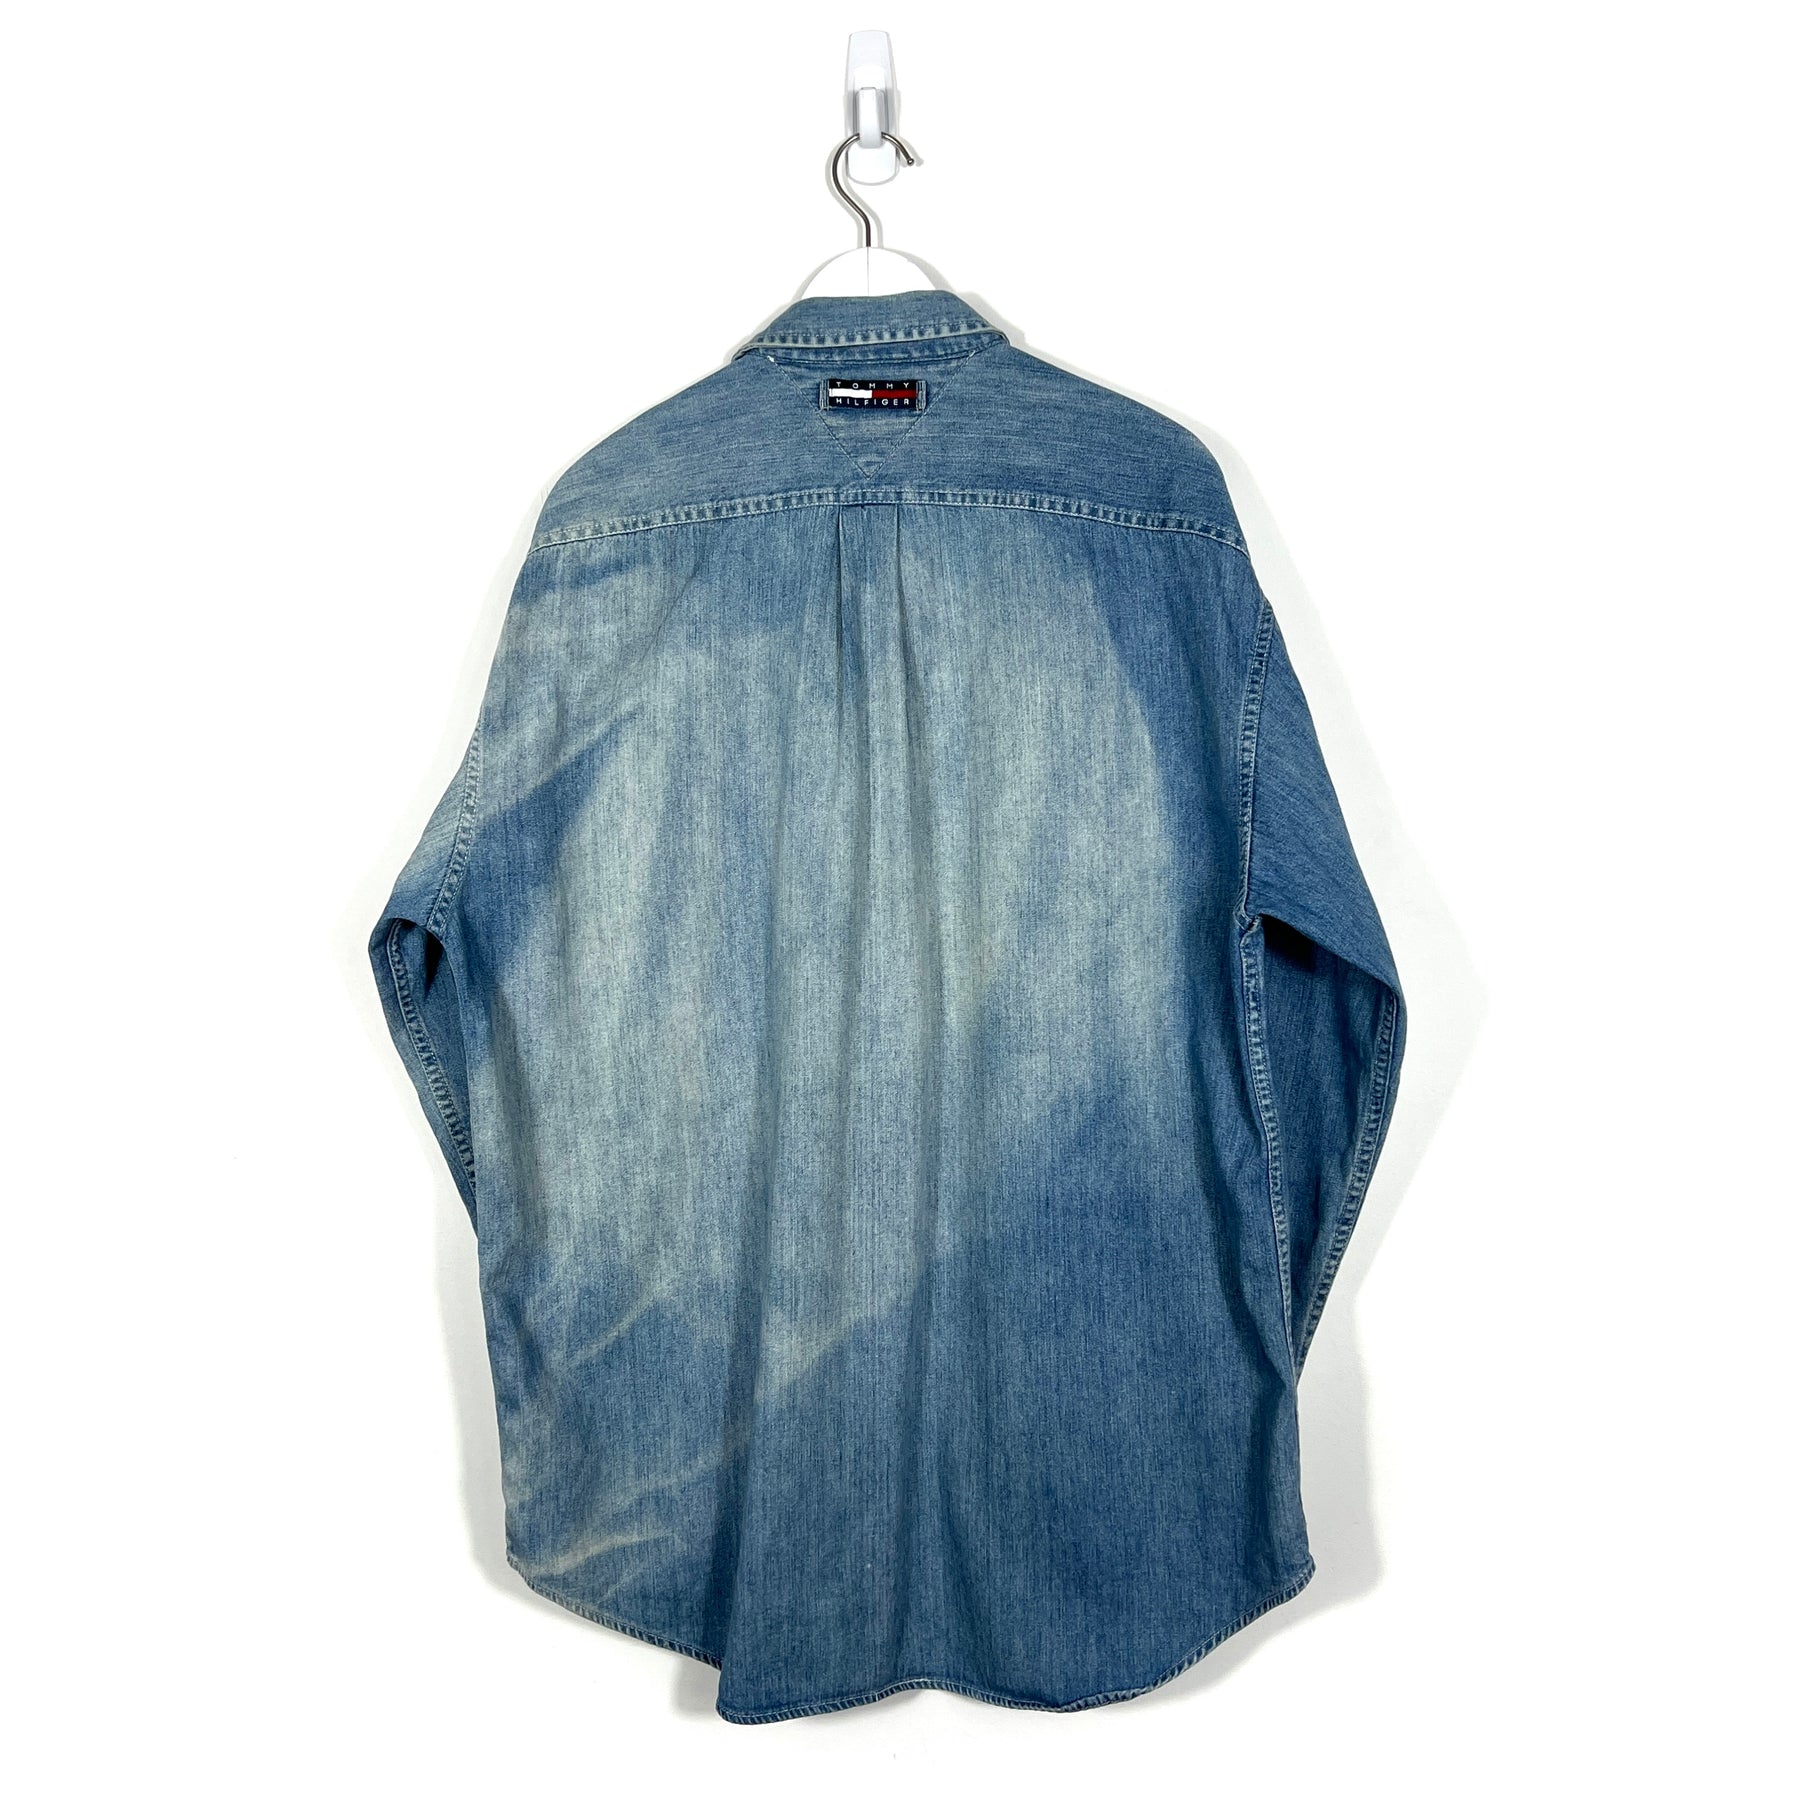 Vintage Tommy Hilfiger Button-Down Shirt - Men's Large